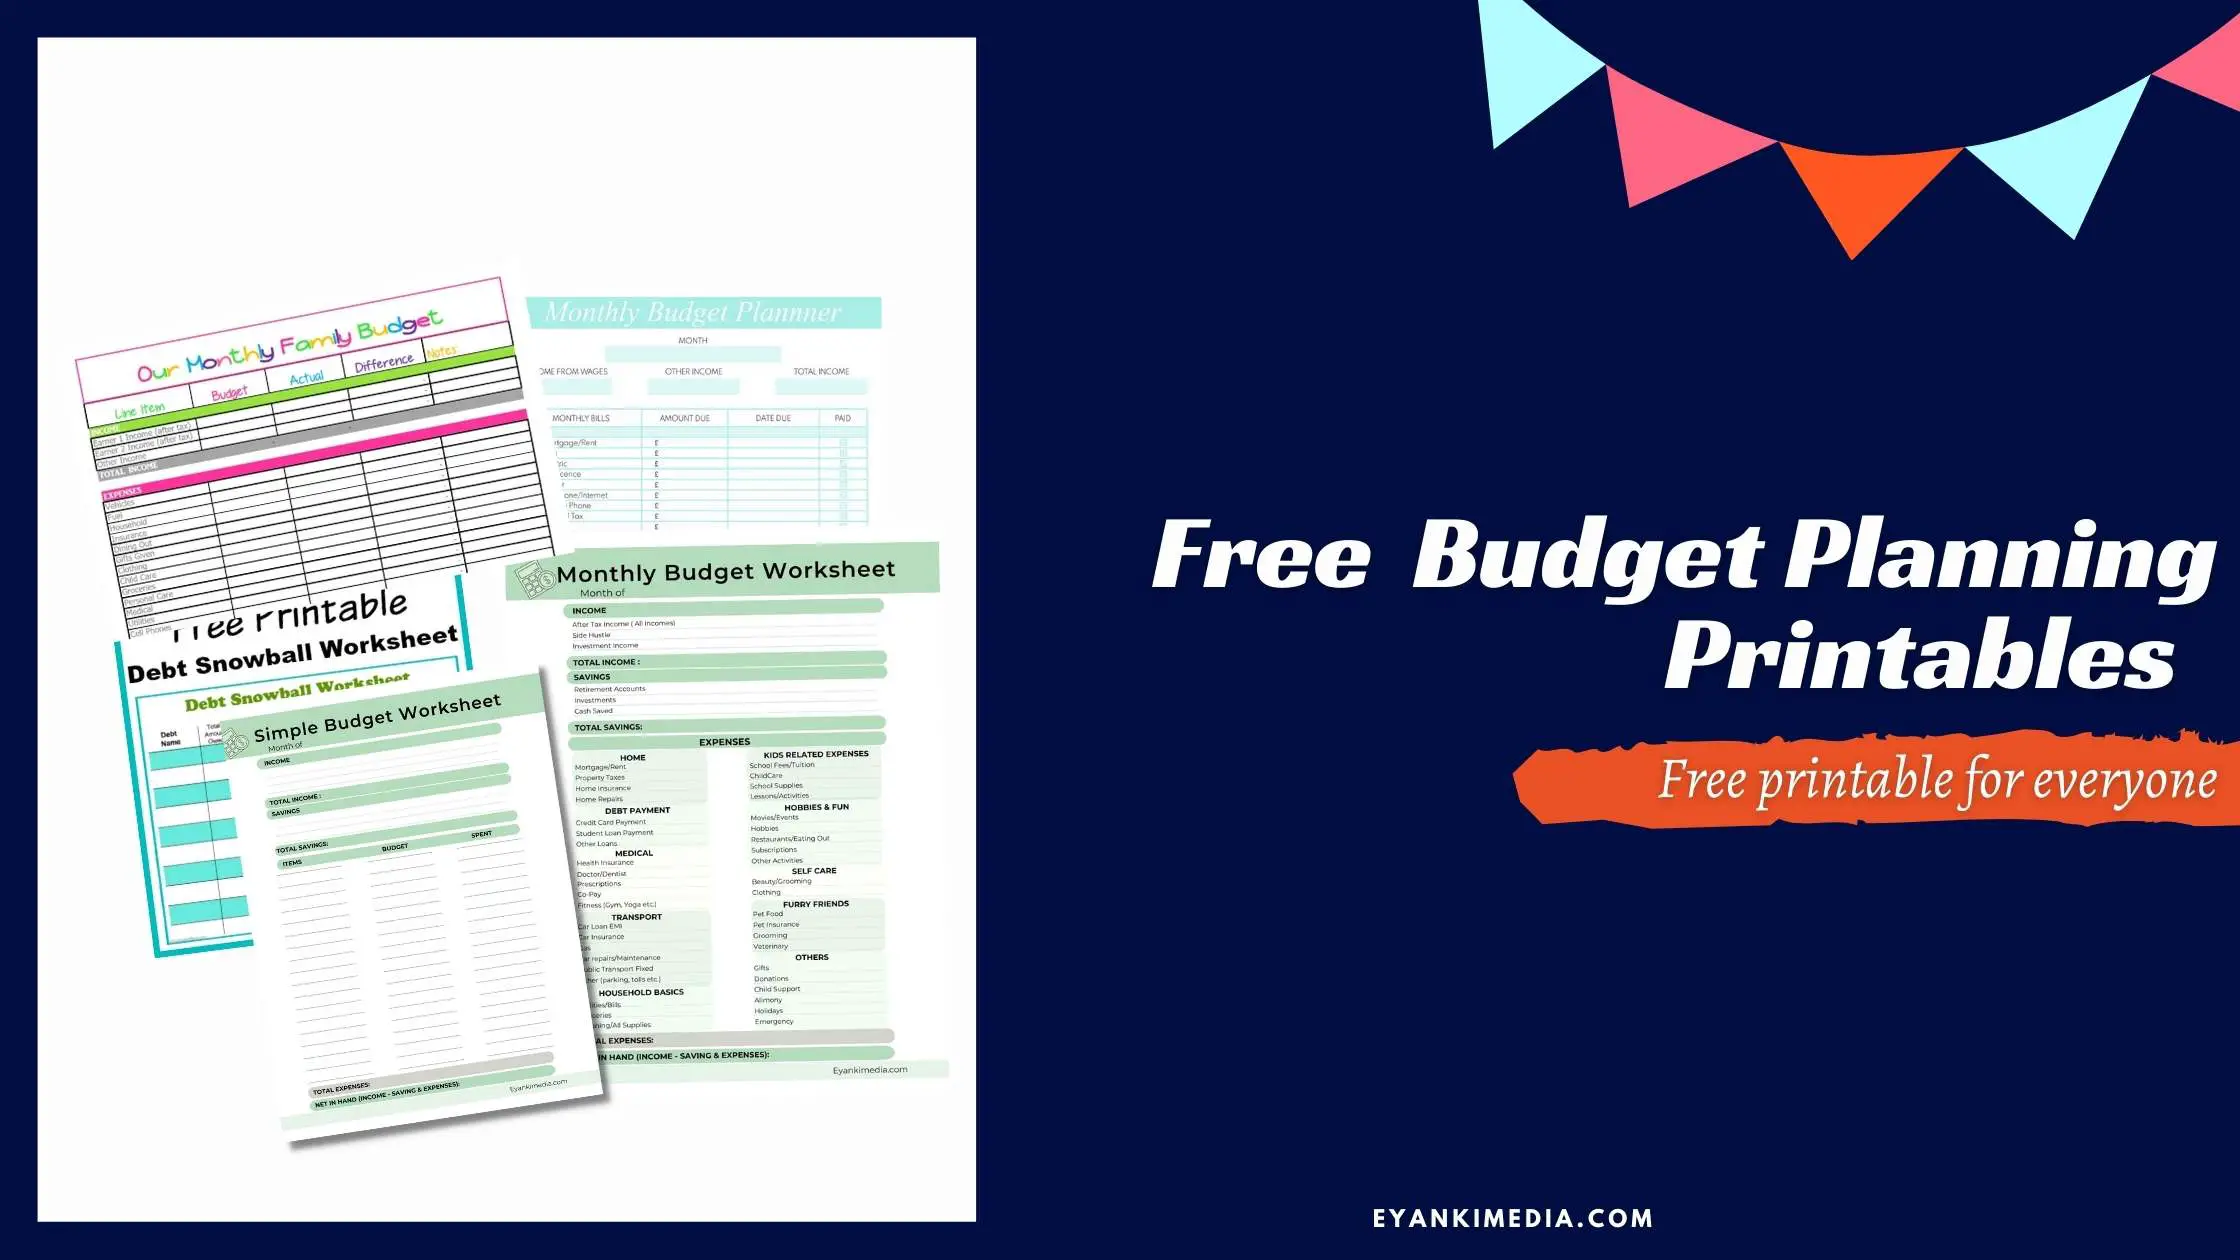 Free budget planning printables: budget templates